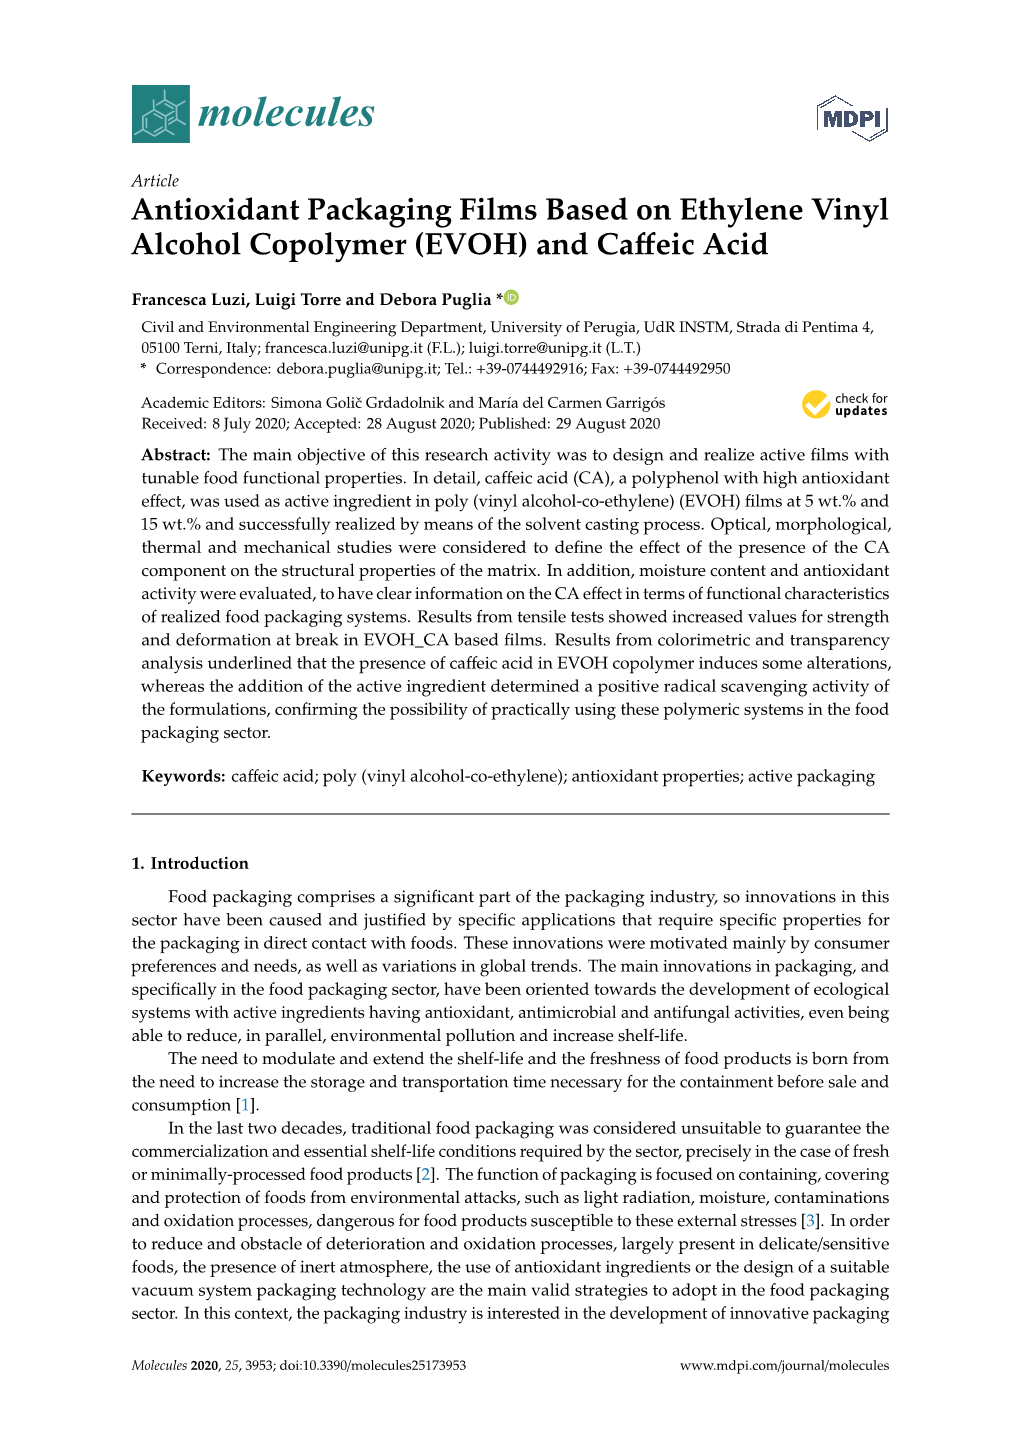 Antioxidant Packaging Films Based on Ethylene Vinyl Alcohol Copolymer (EVOH) and Caﬀeic Acid